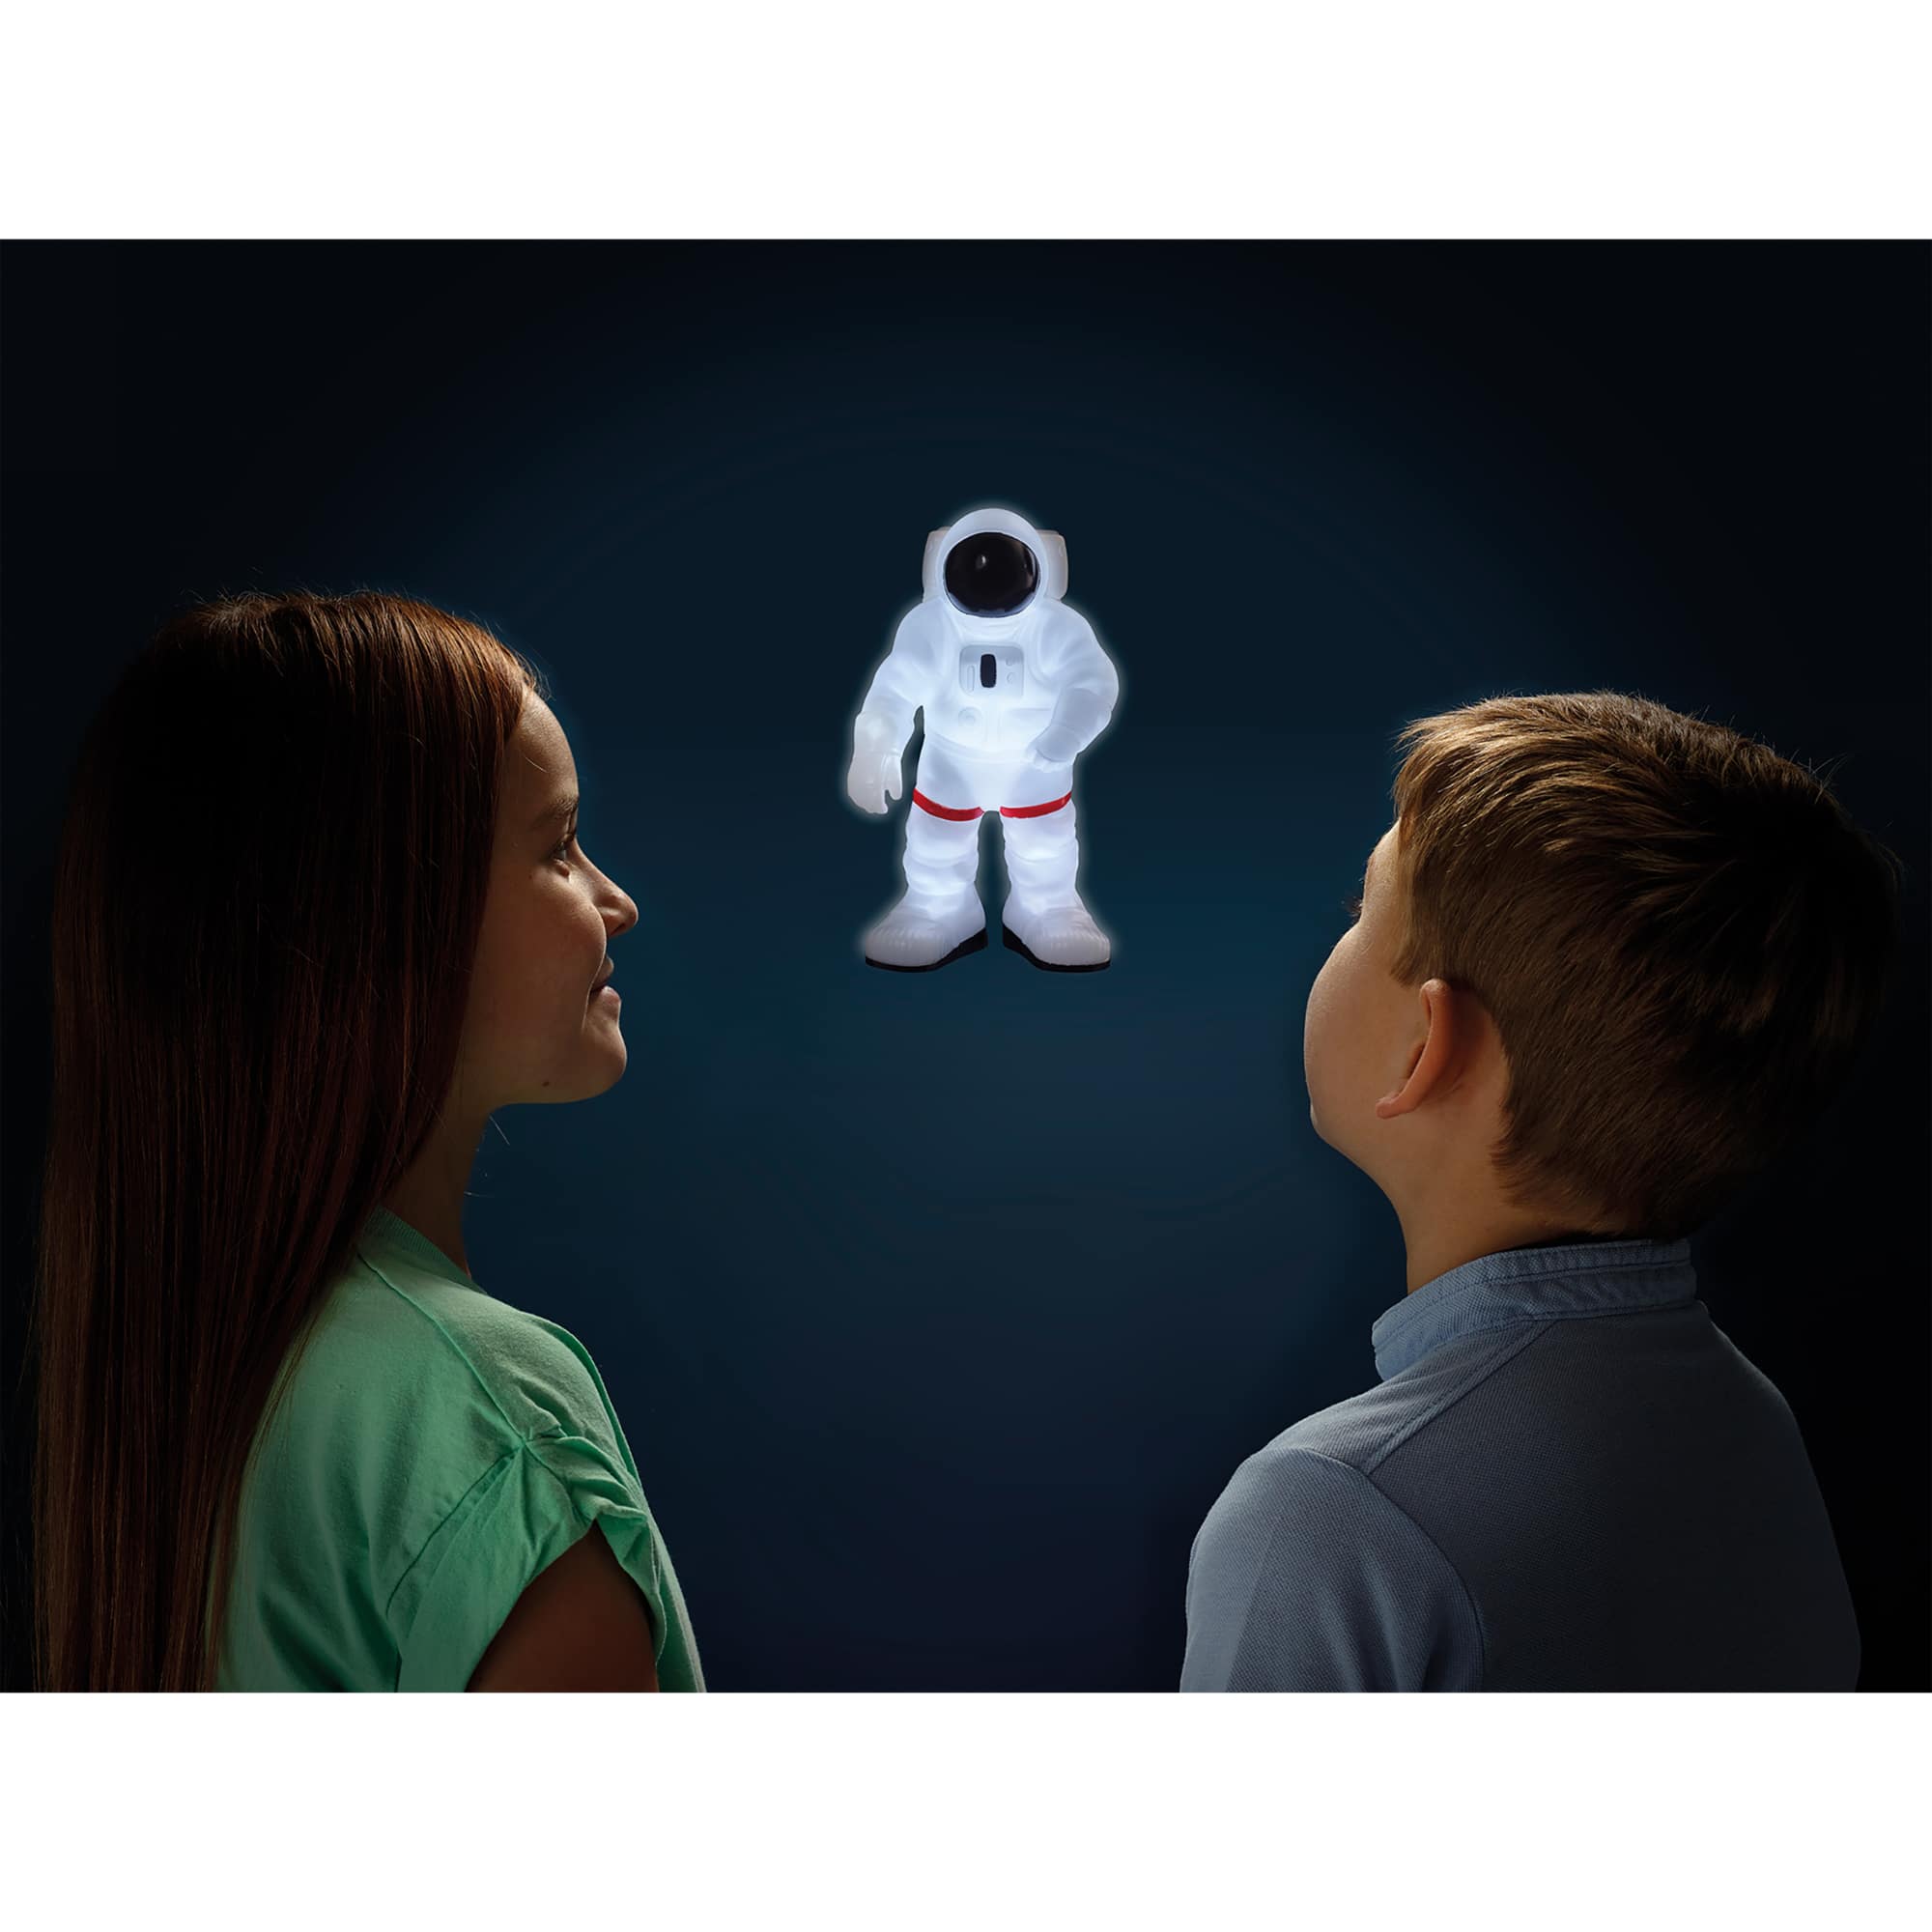 Brainstorm Toys Light-up &#x26; Glow Astronaut